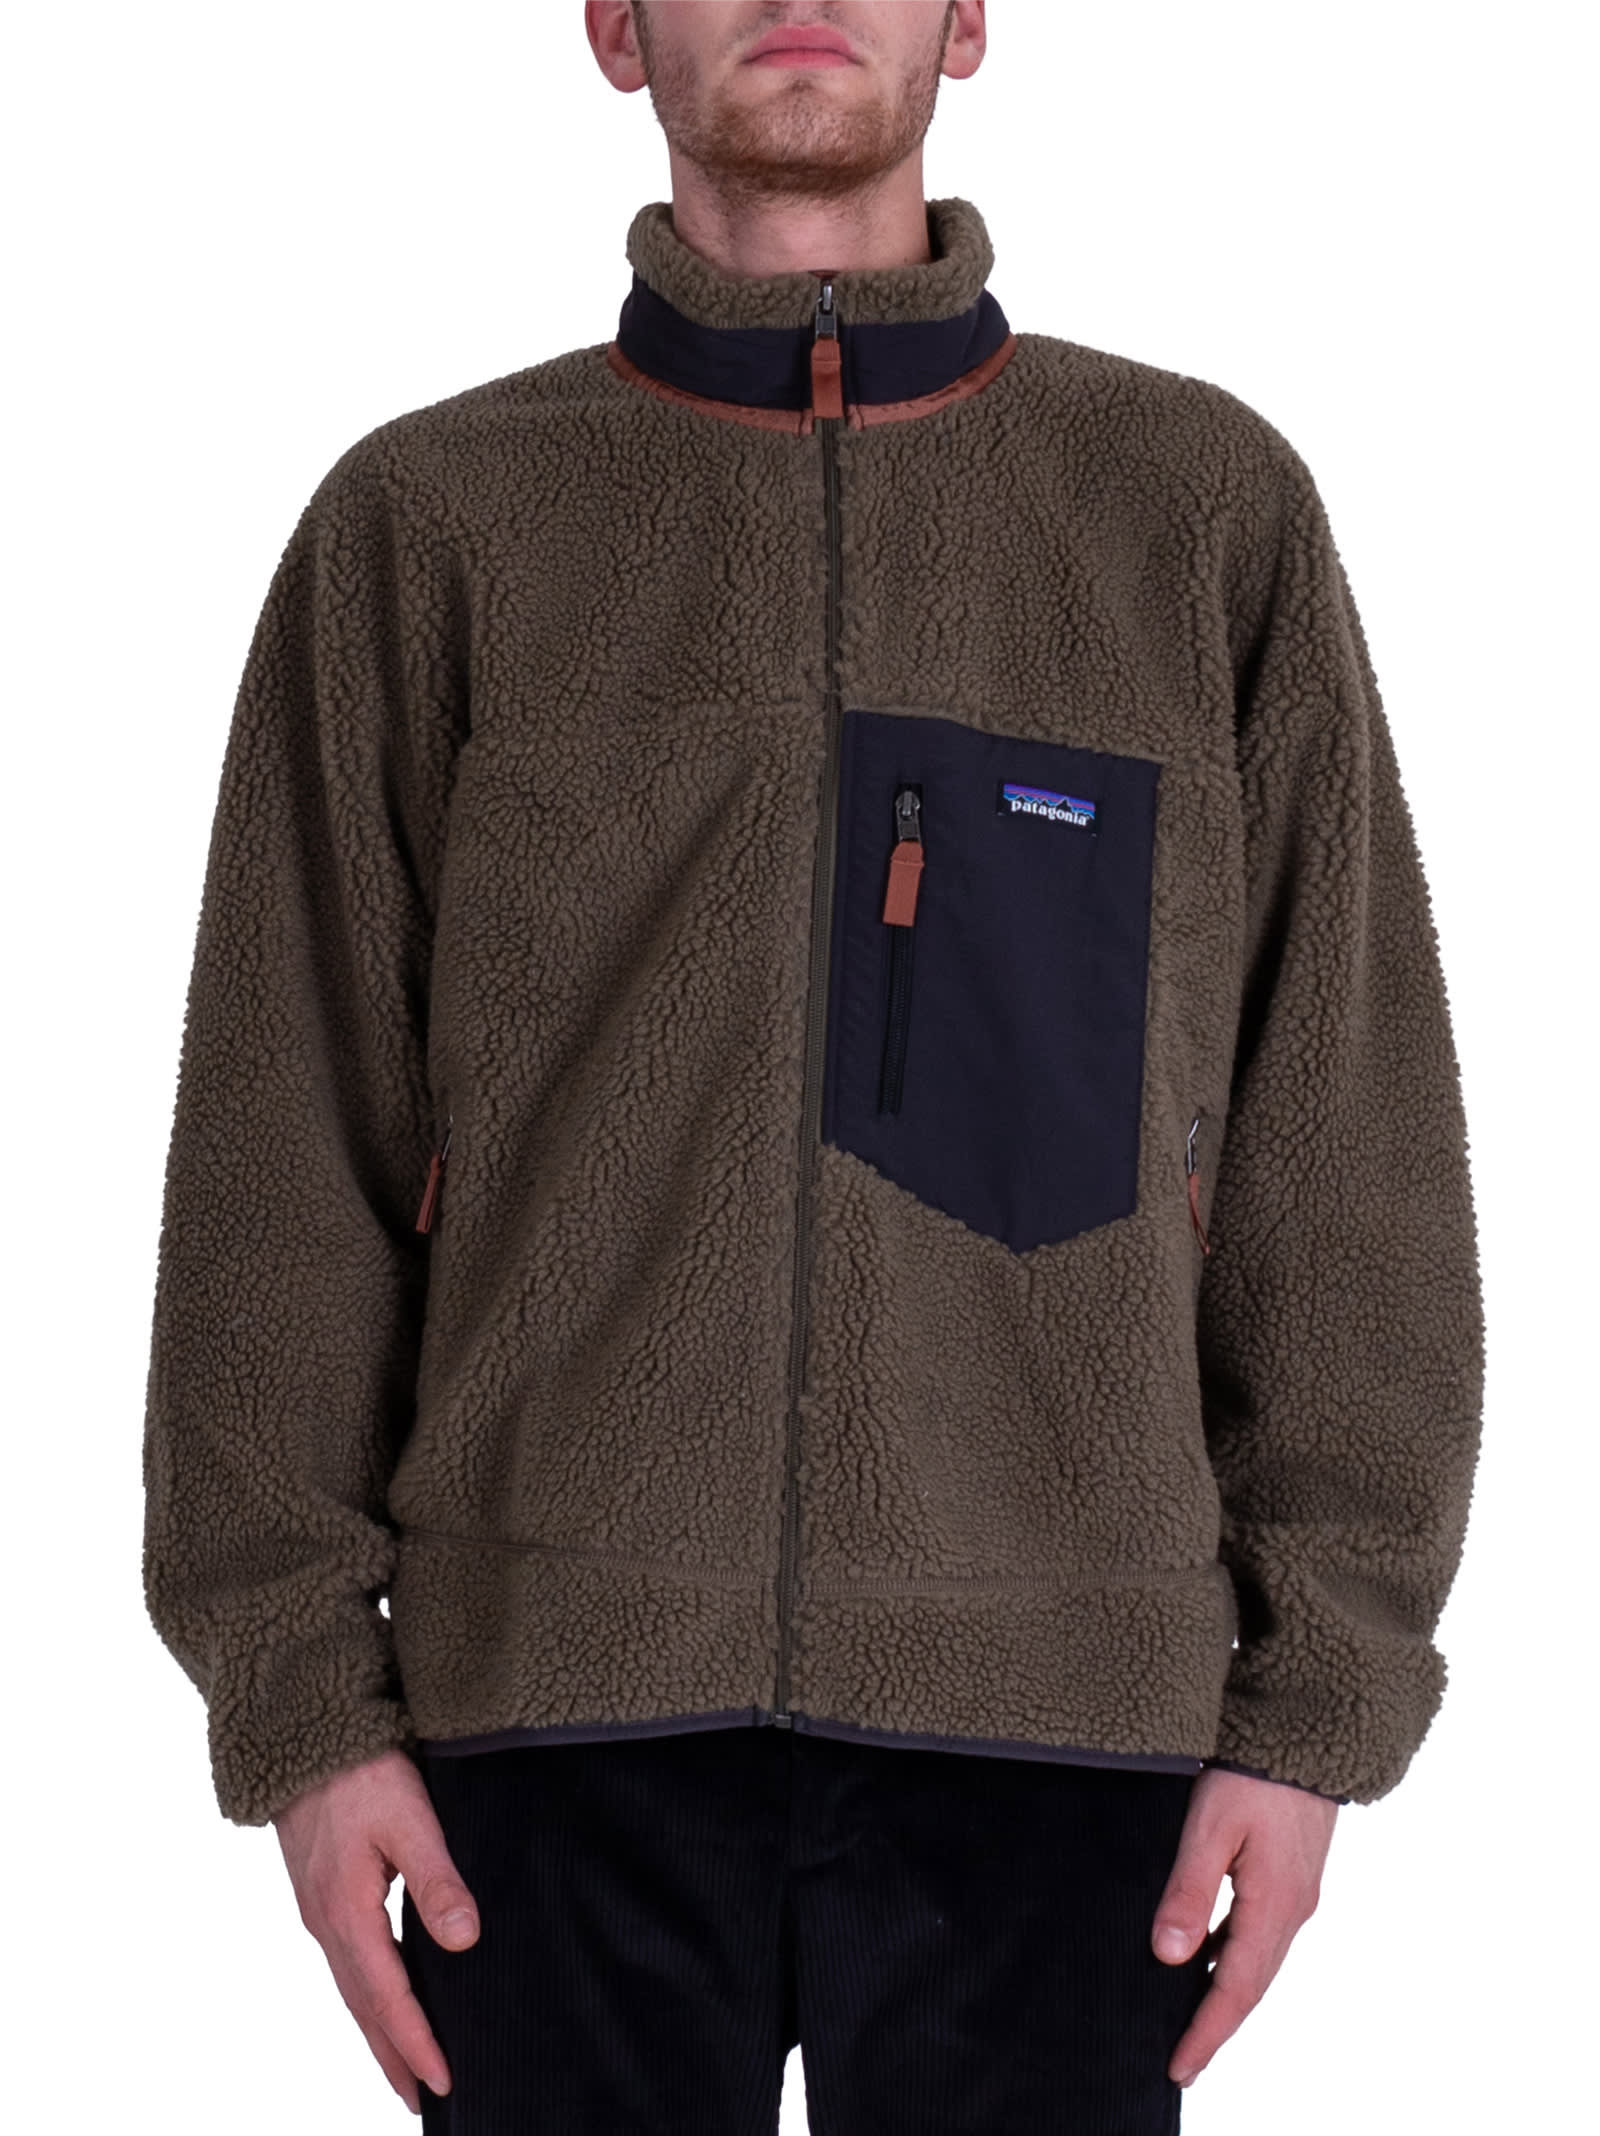 Patagonia Classic Retro-x Fleece Jacket